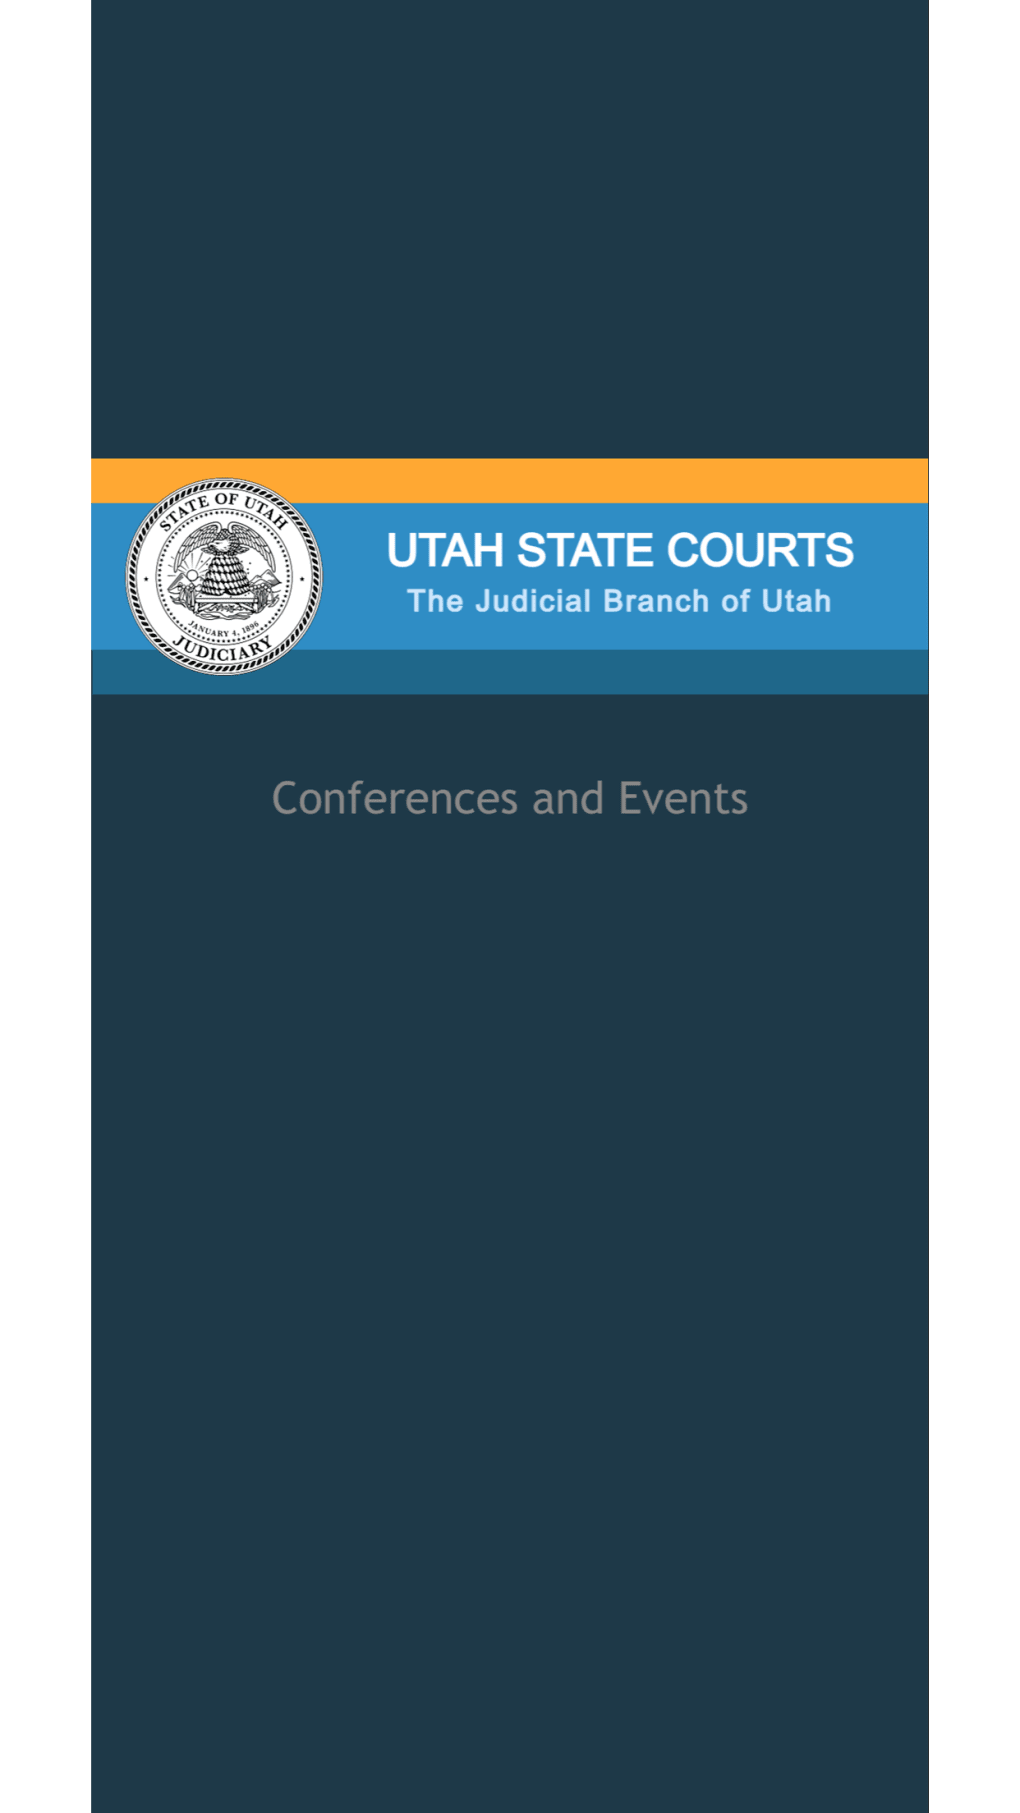 Utah State Courts Events для iPhone Скачать